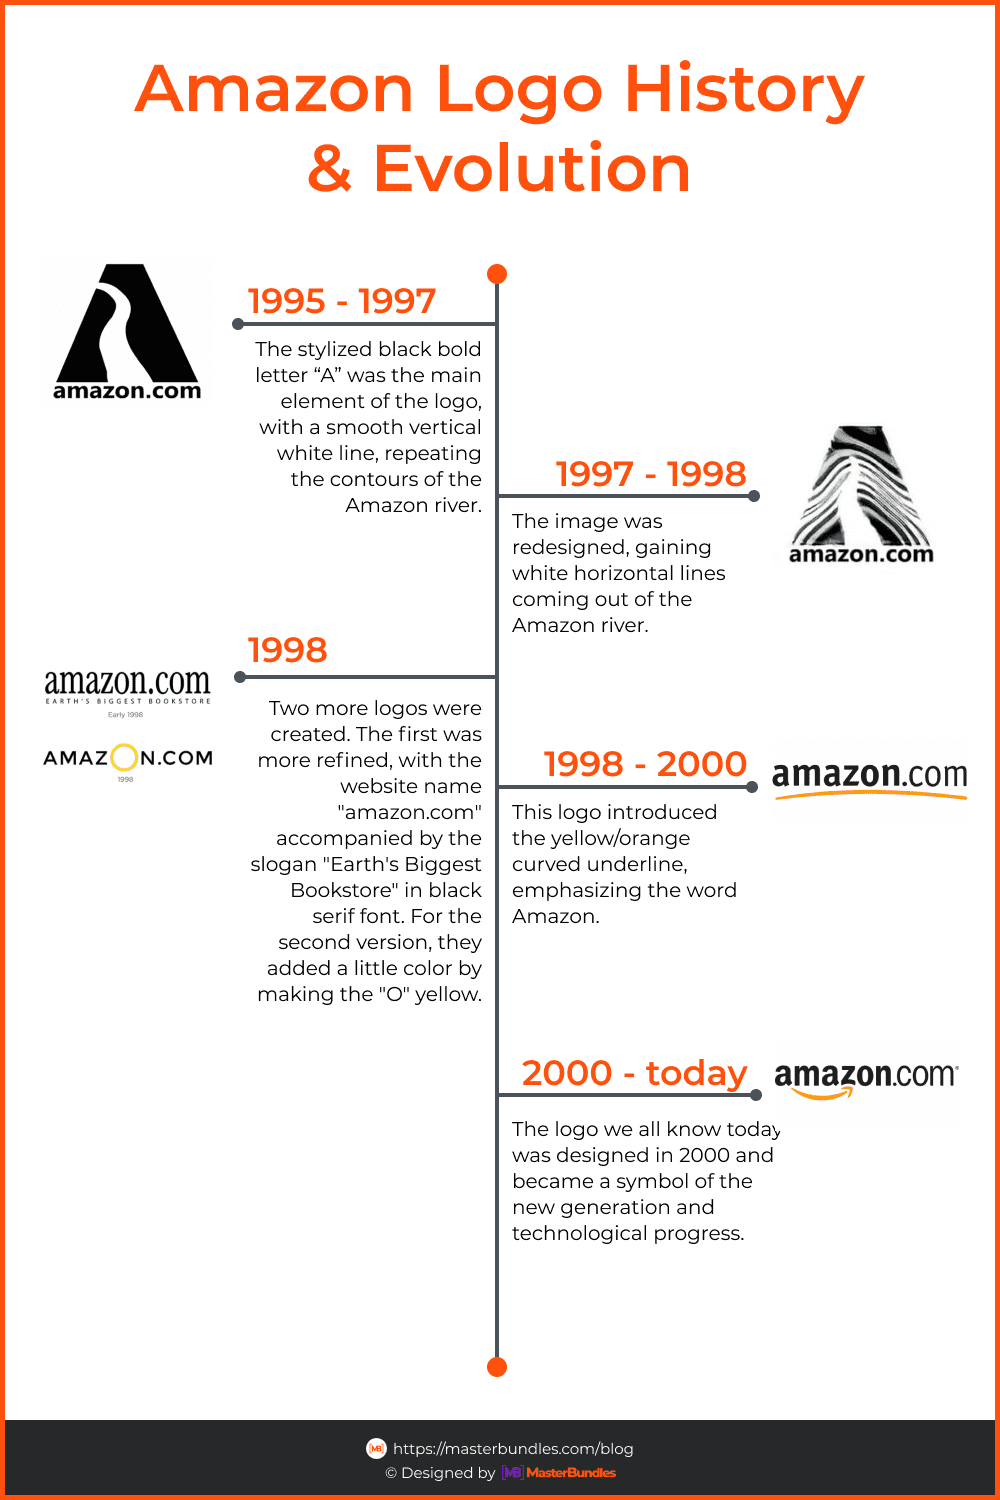 Amazon Logo History by MasterBundles.